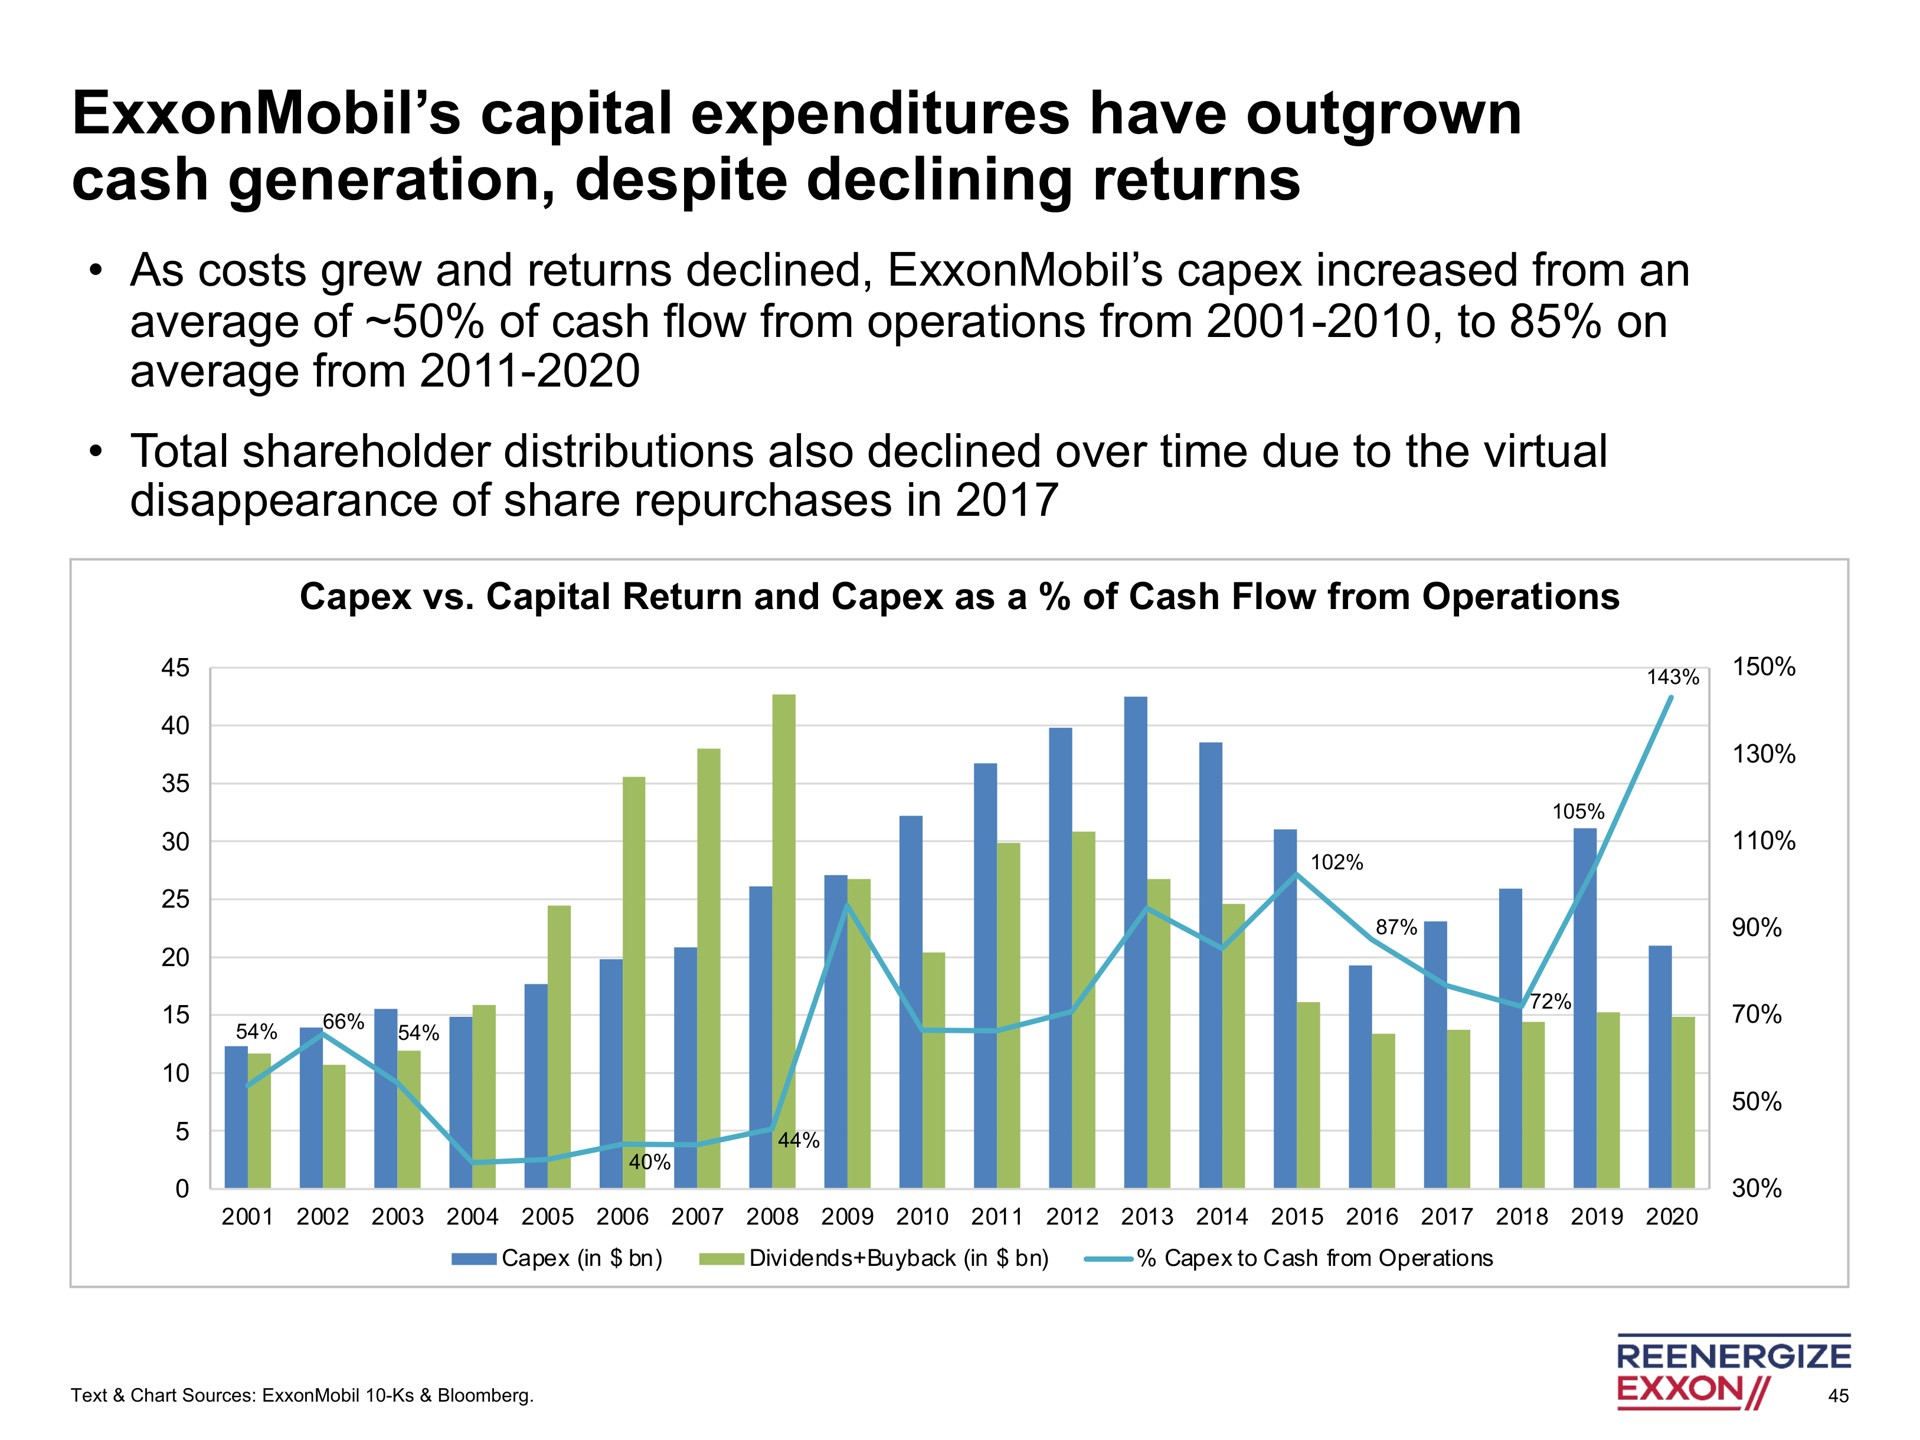 capital expenditures have outgrown cash generation despite declining returns | Engine No. 1